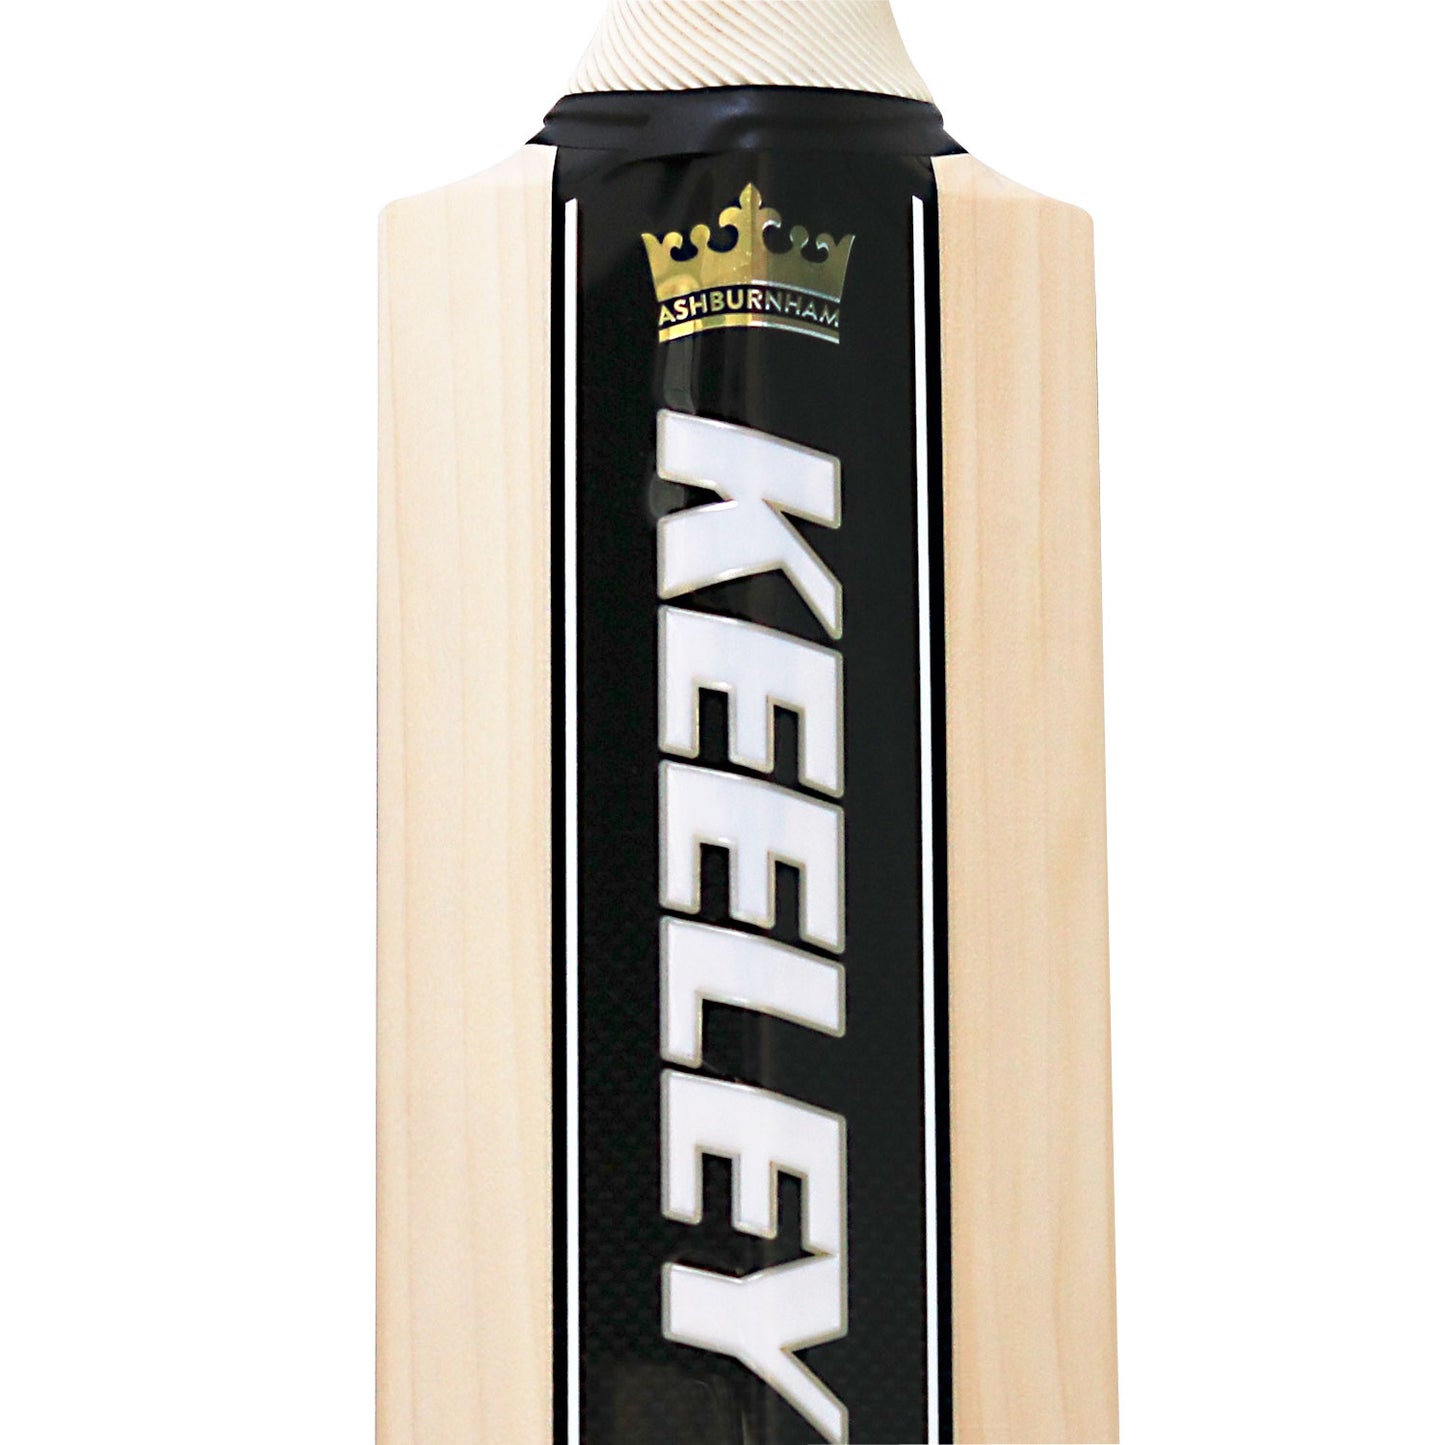 Keeley Superior Grade 2 Cricket Bat - Black (2023)